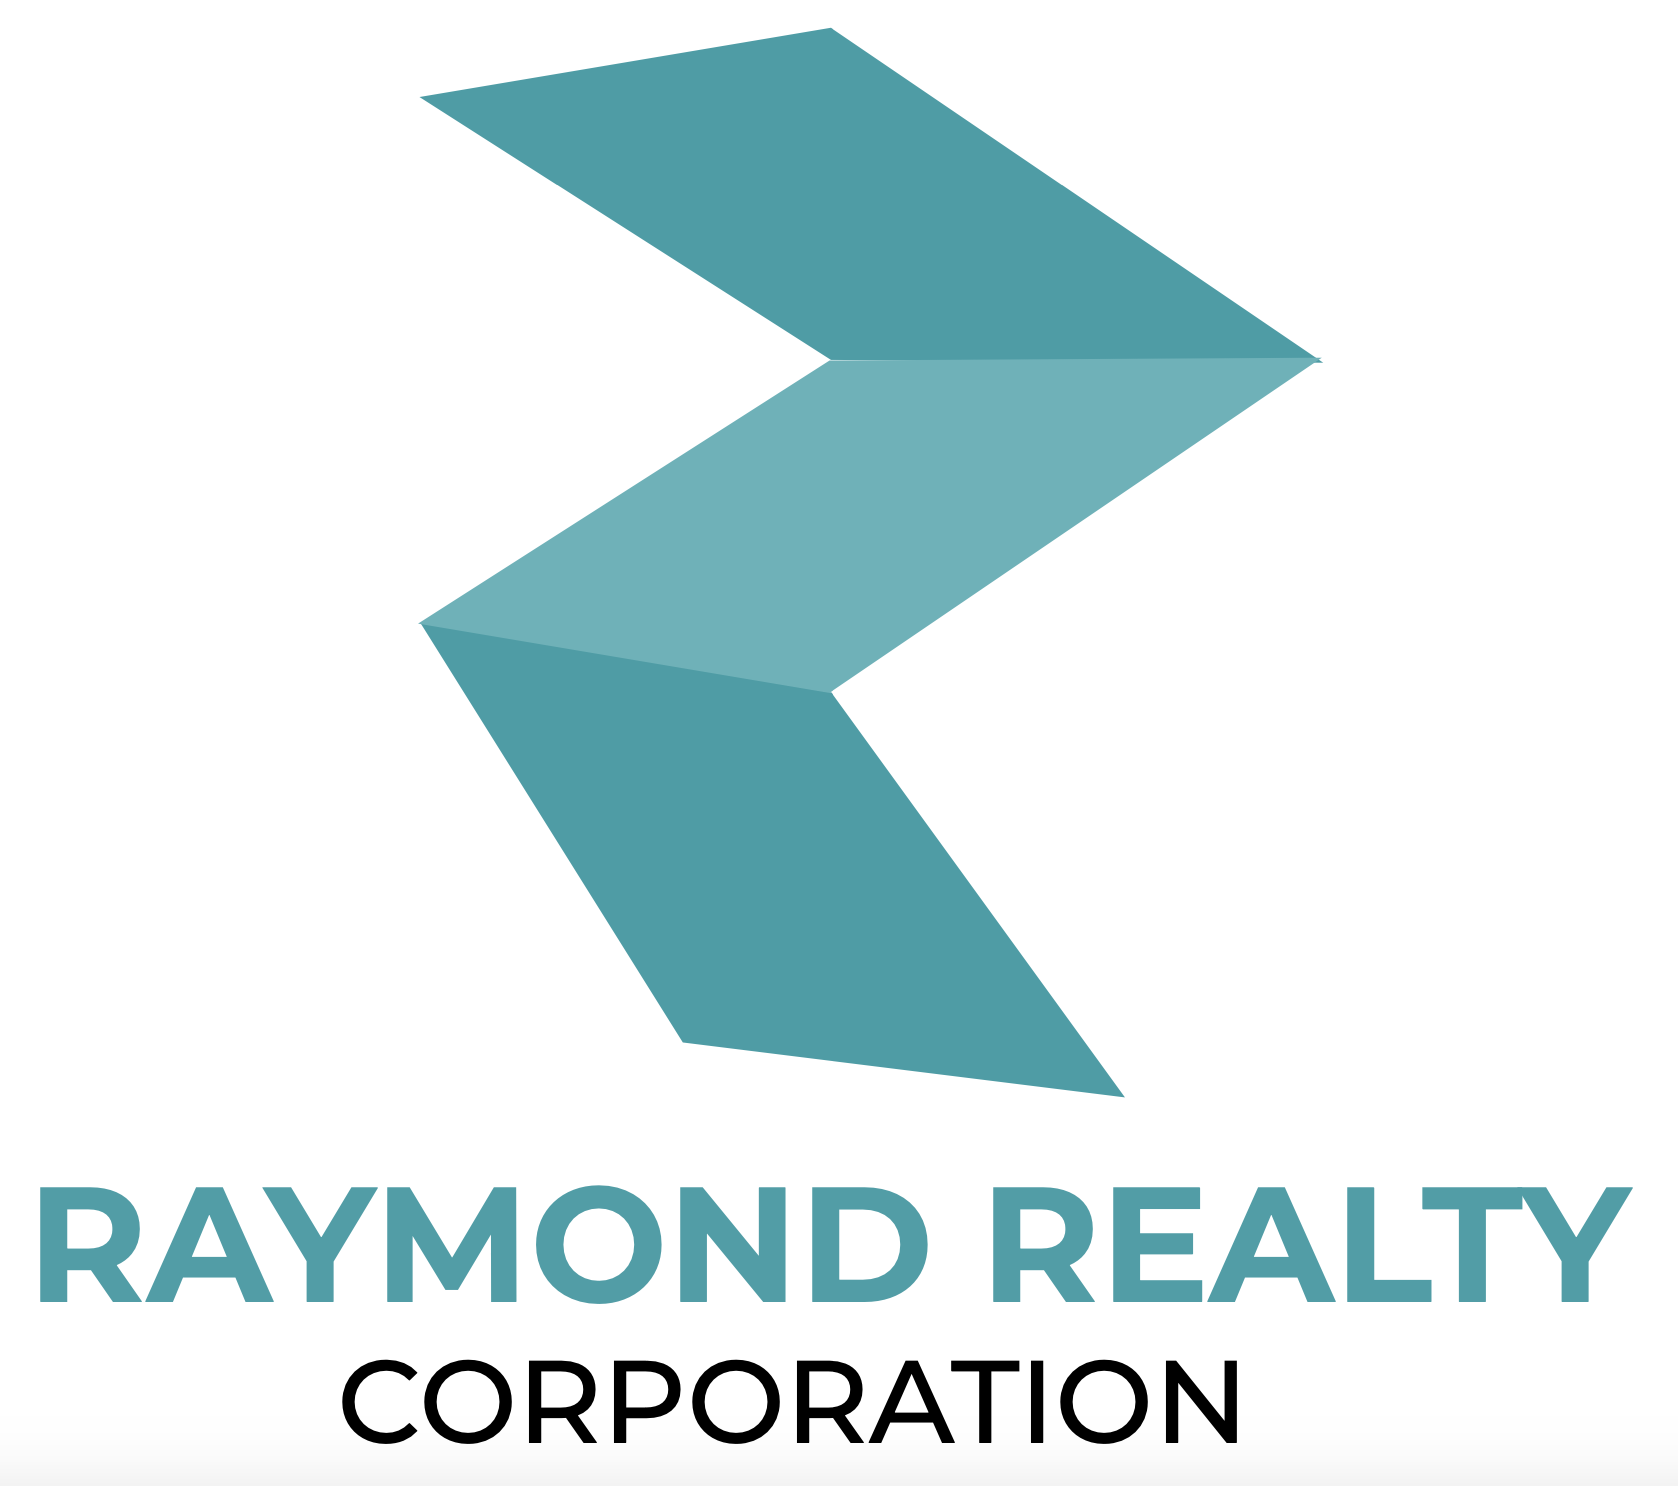 RAYMOND REALTY CORPORATION